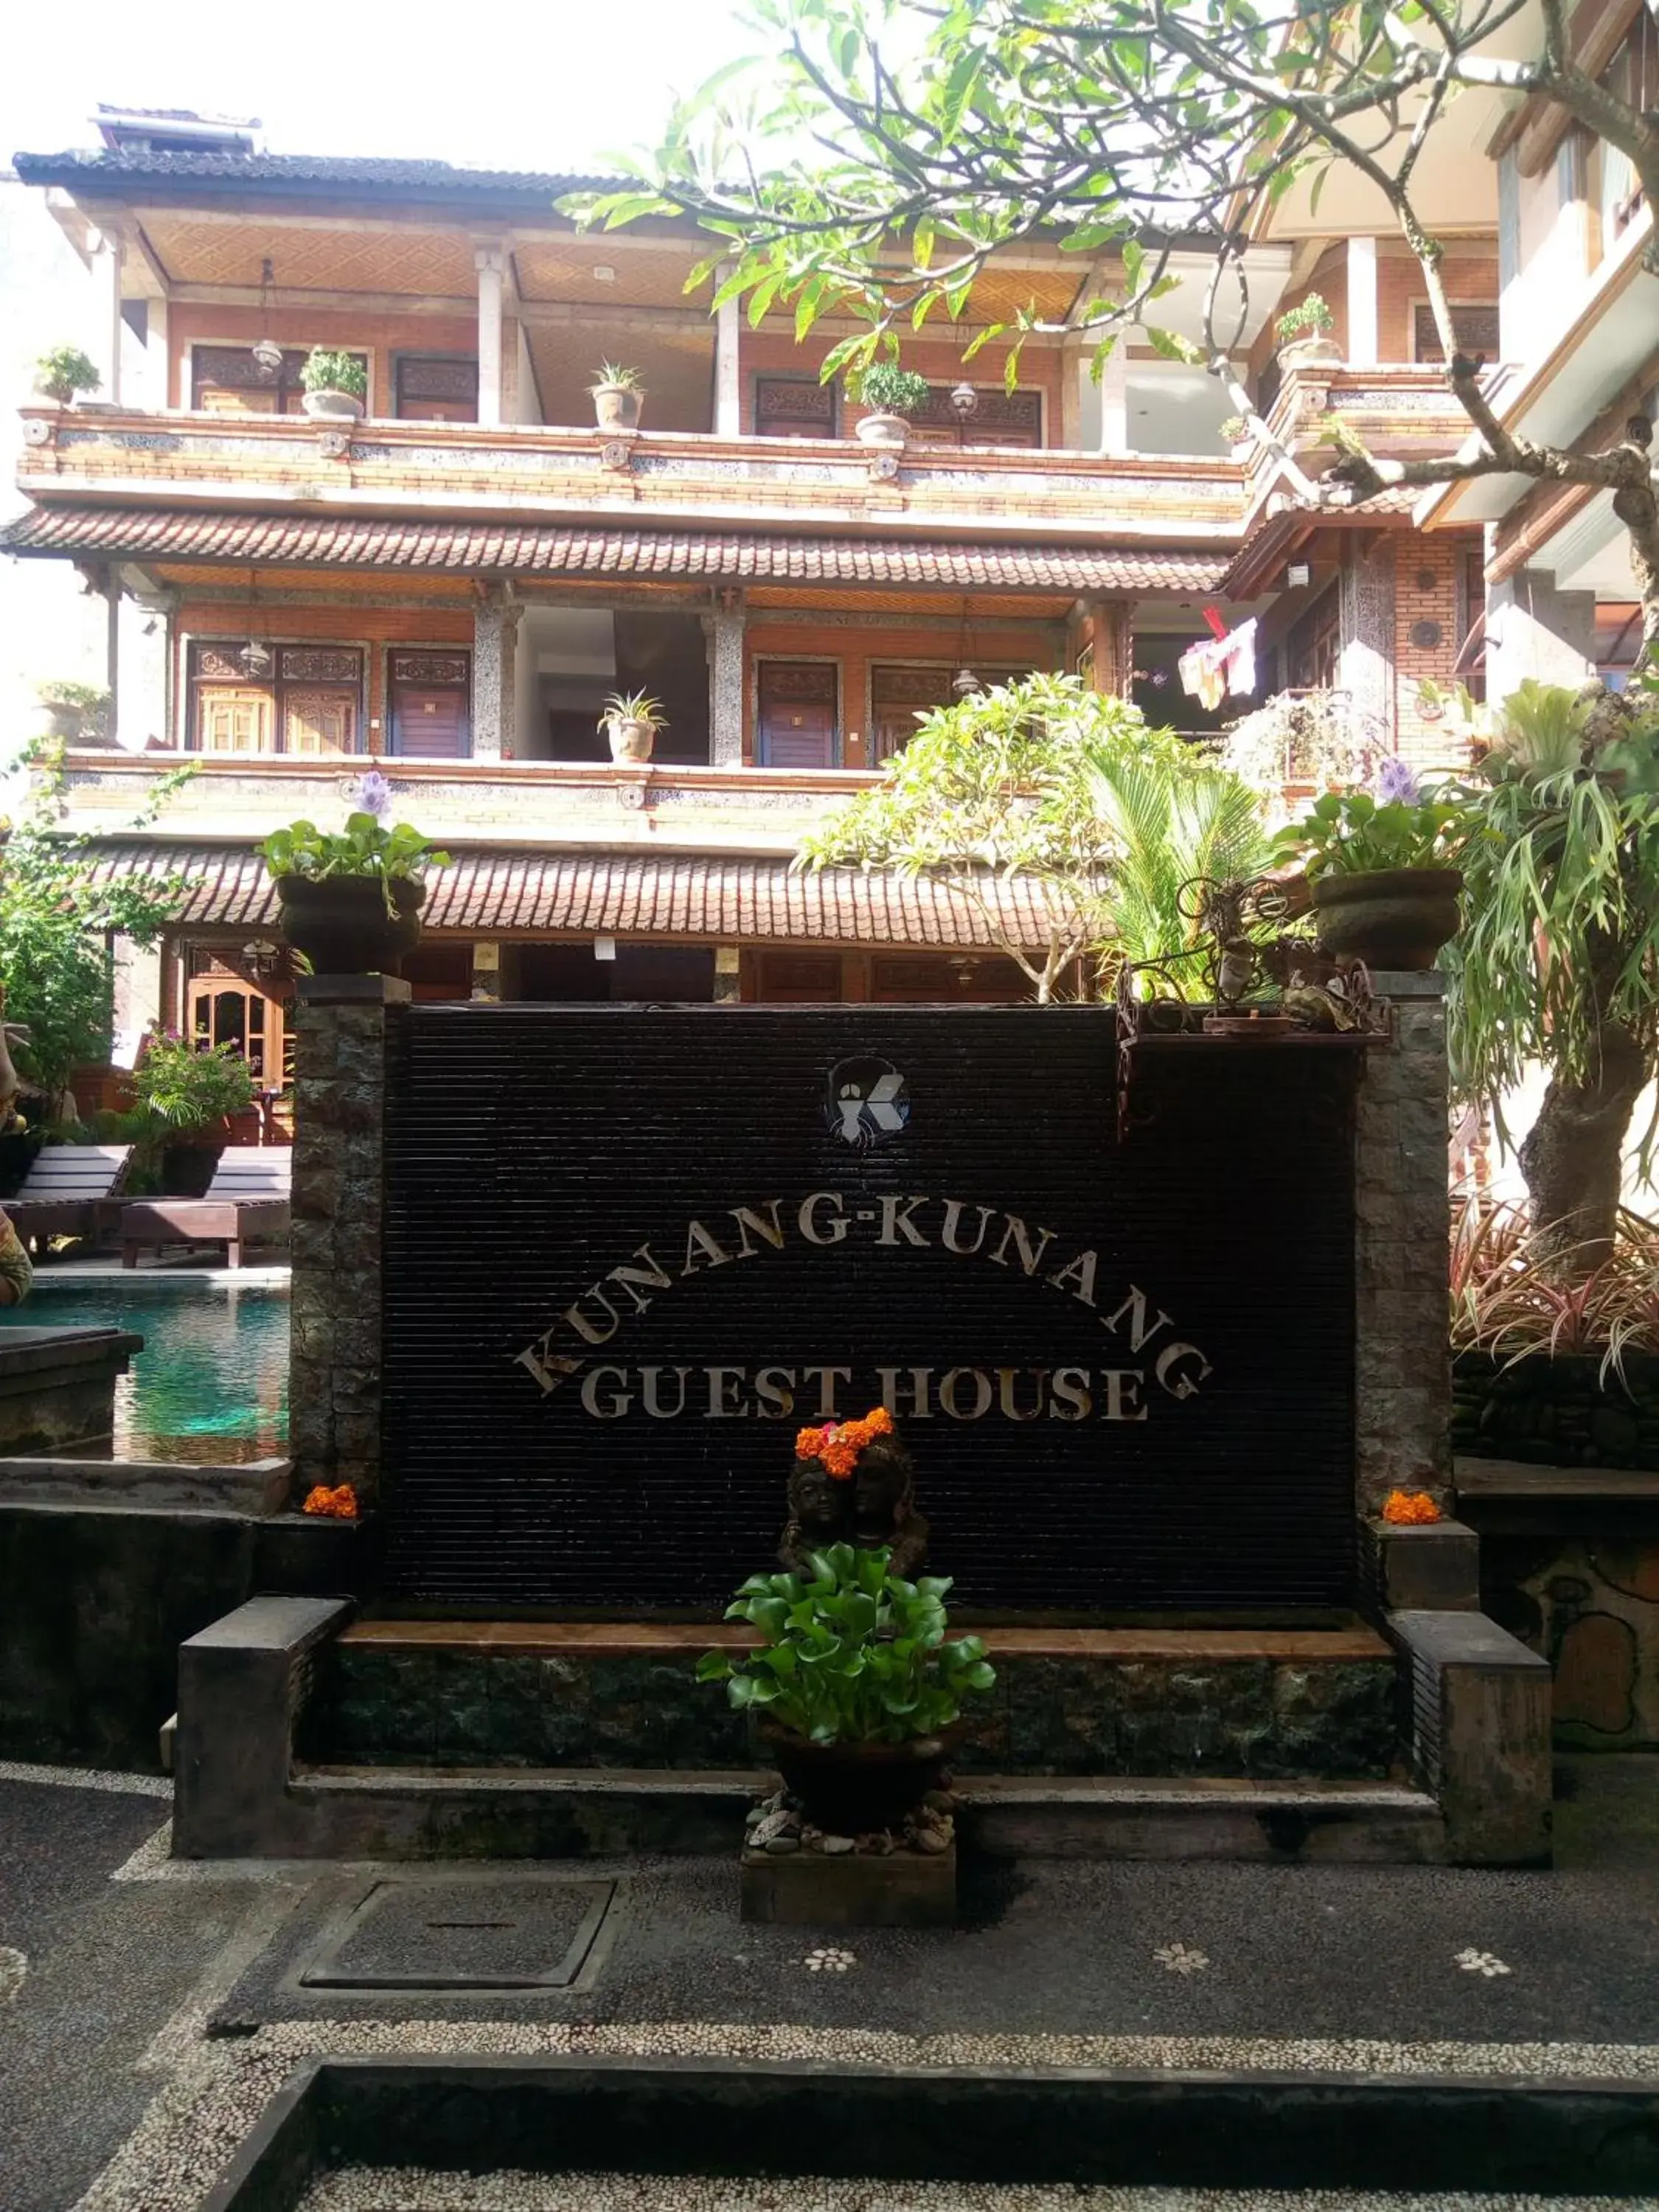 Property logo or sign in Kun Kun Guest House